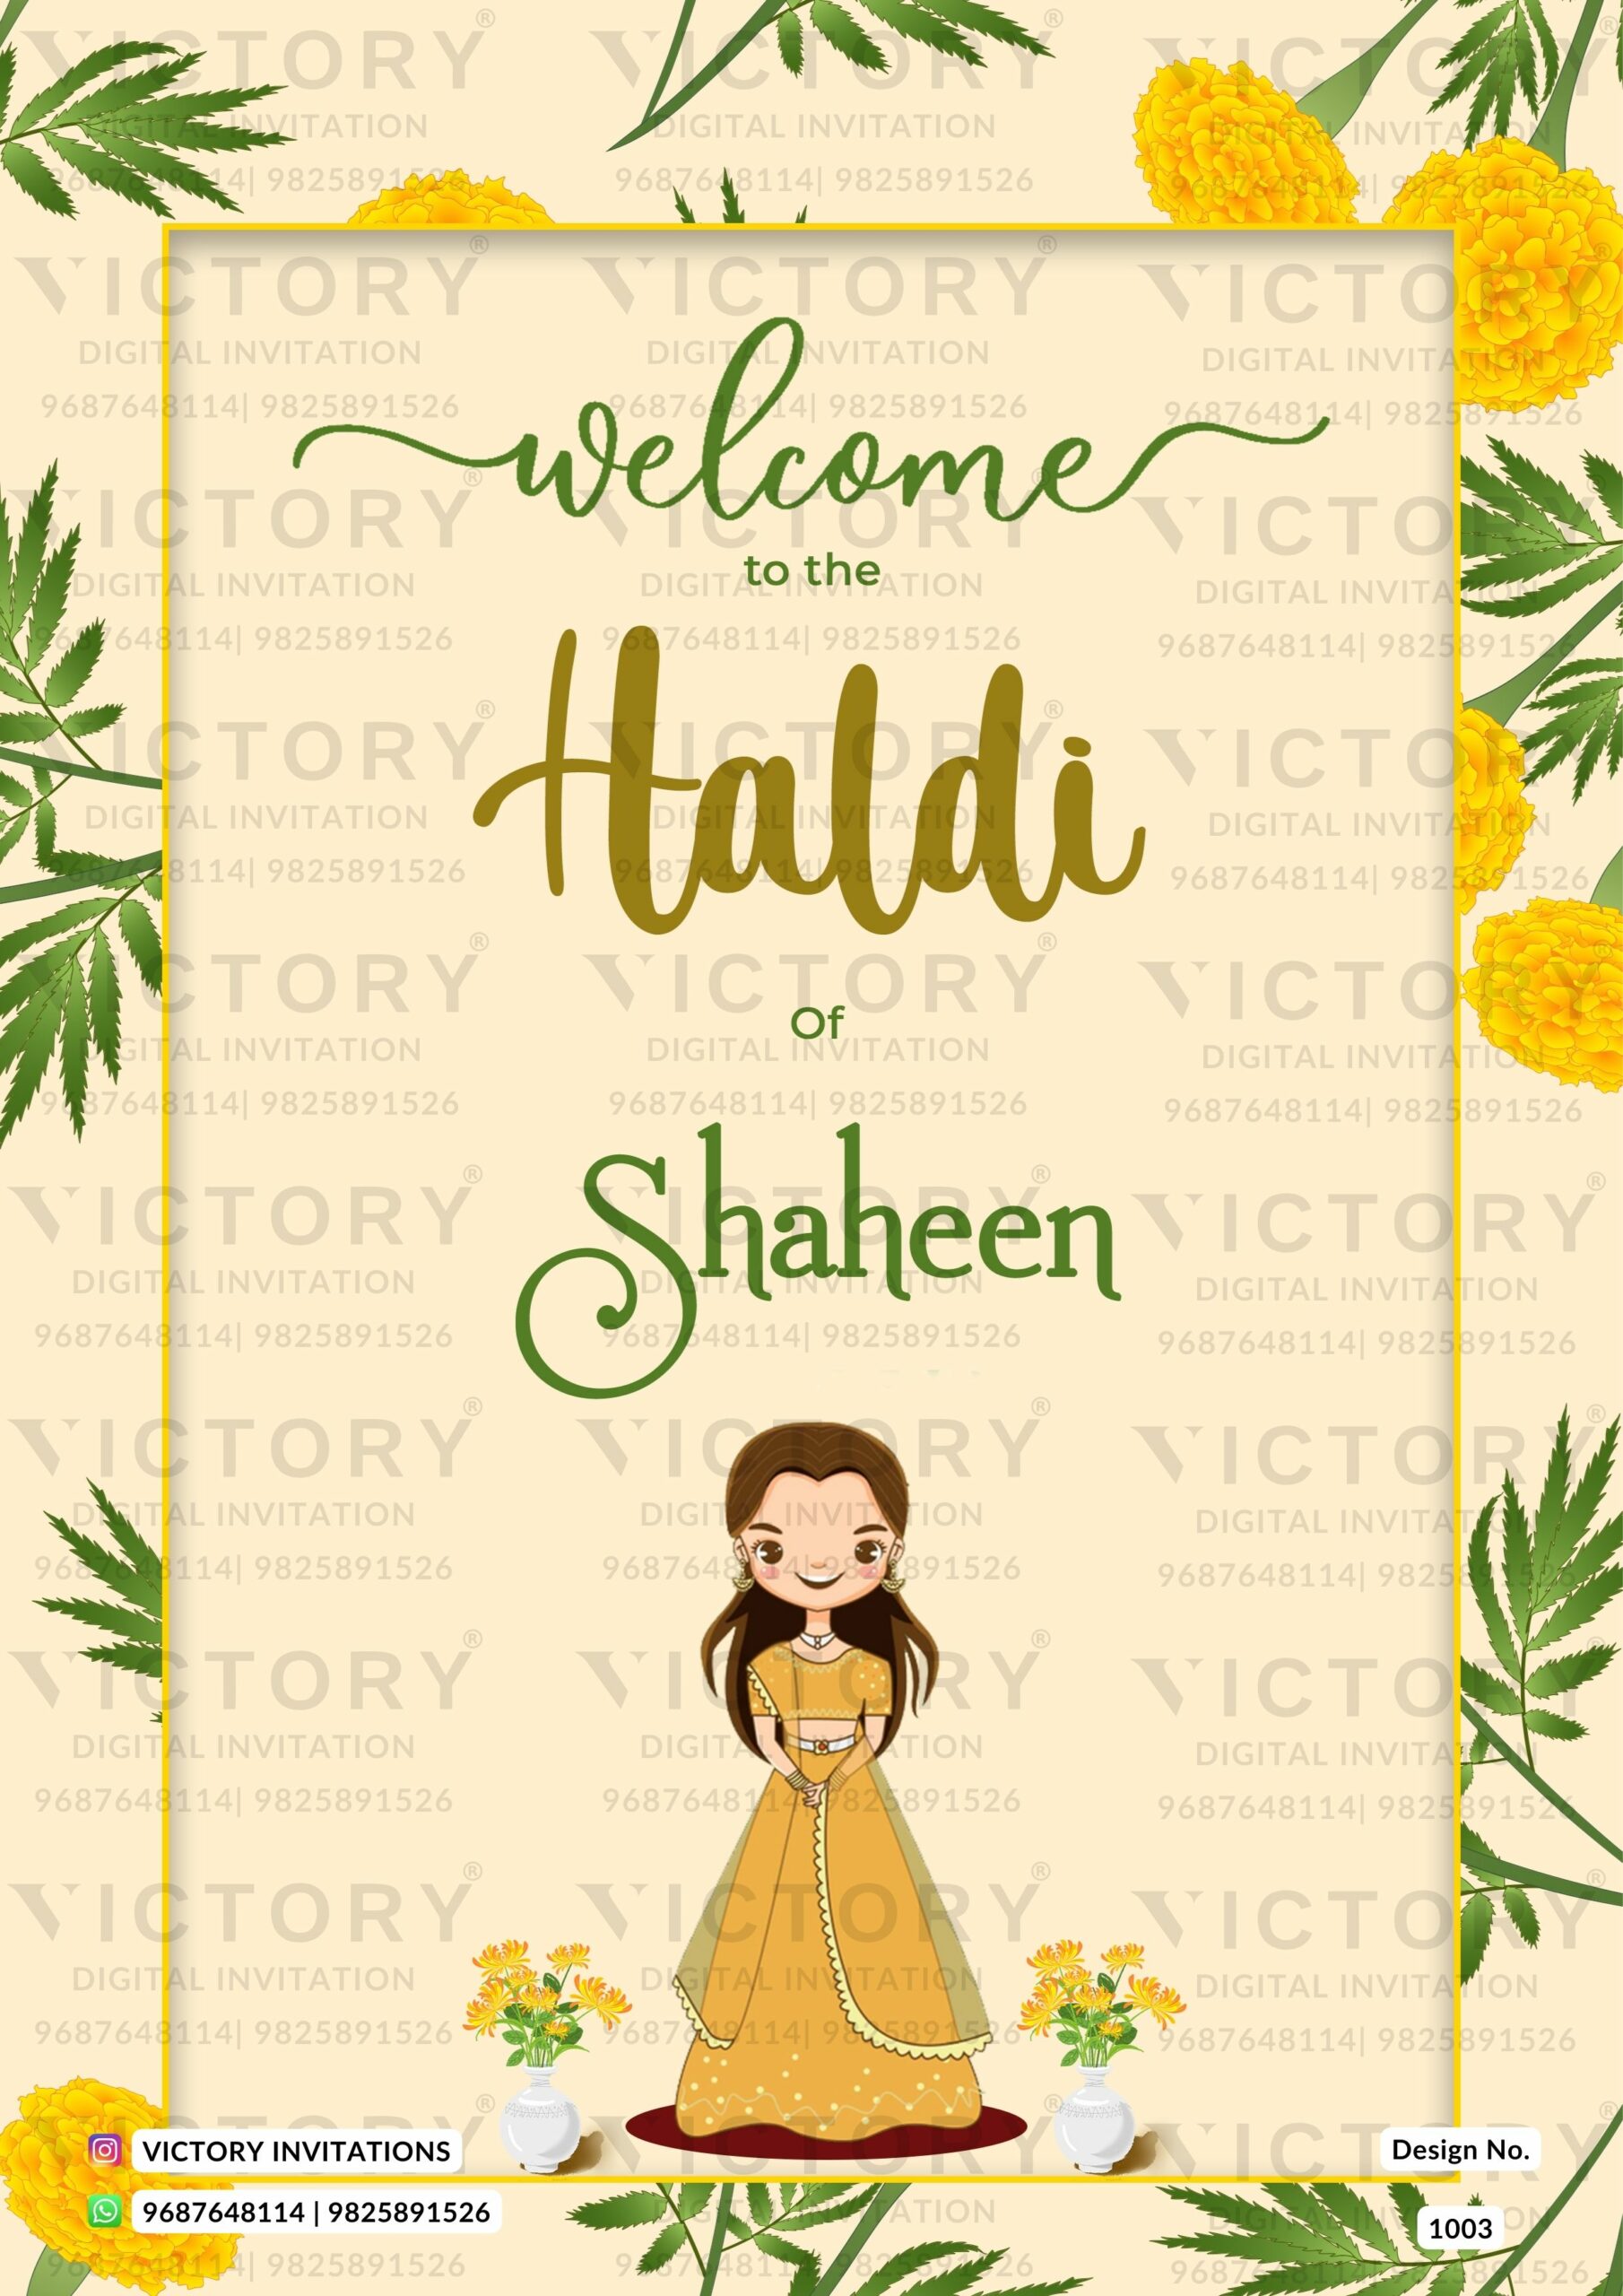 New Marigold Theme Traditional Indian Digital invitation card with Haldi  Ceremony Bride Illustration, design no. 1003 